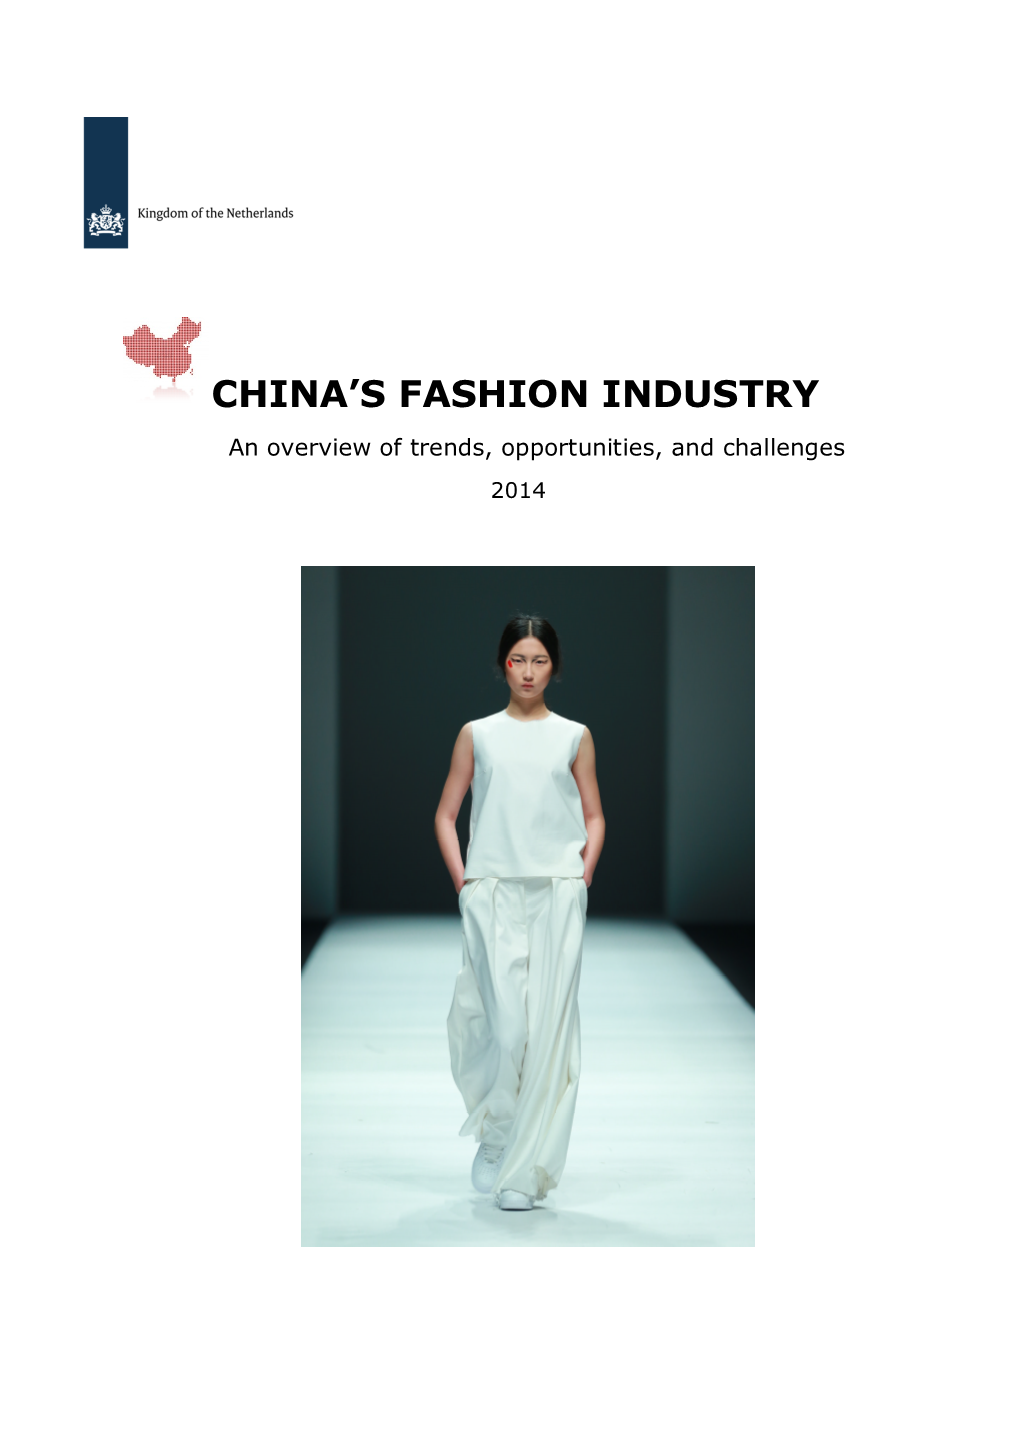 China's Fashion Industry